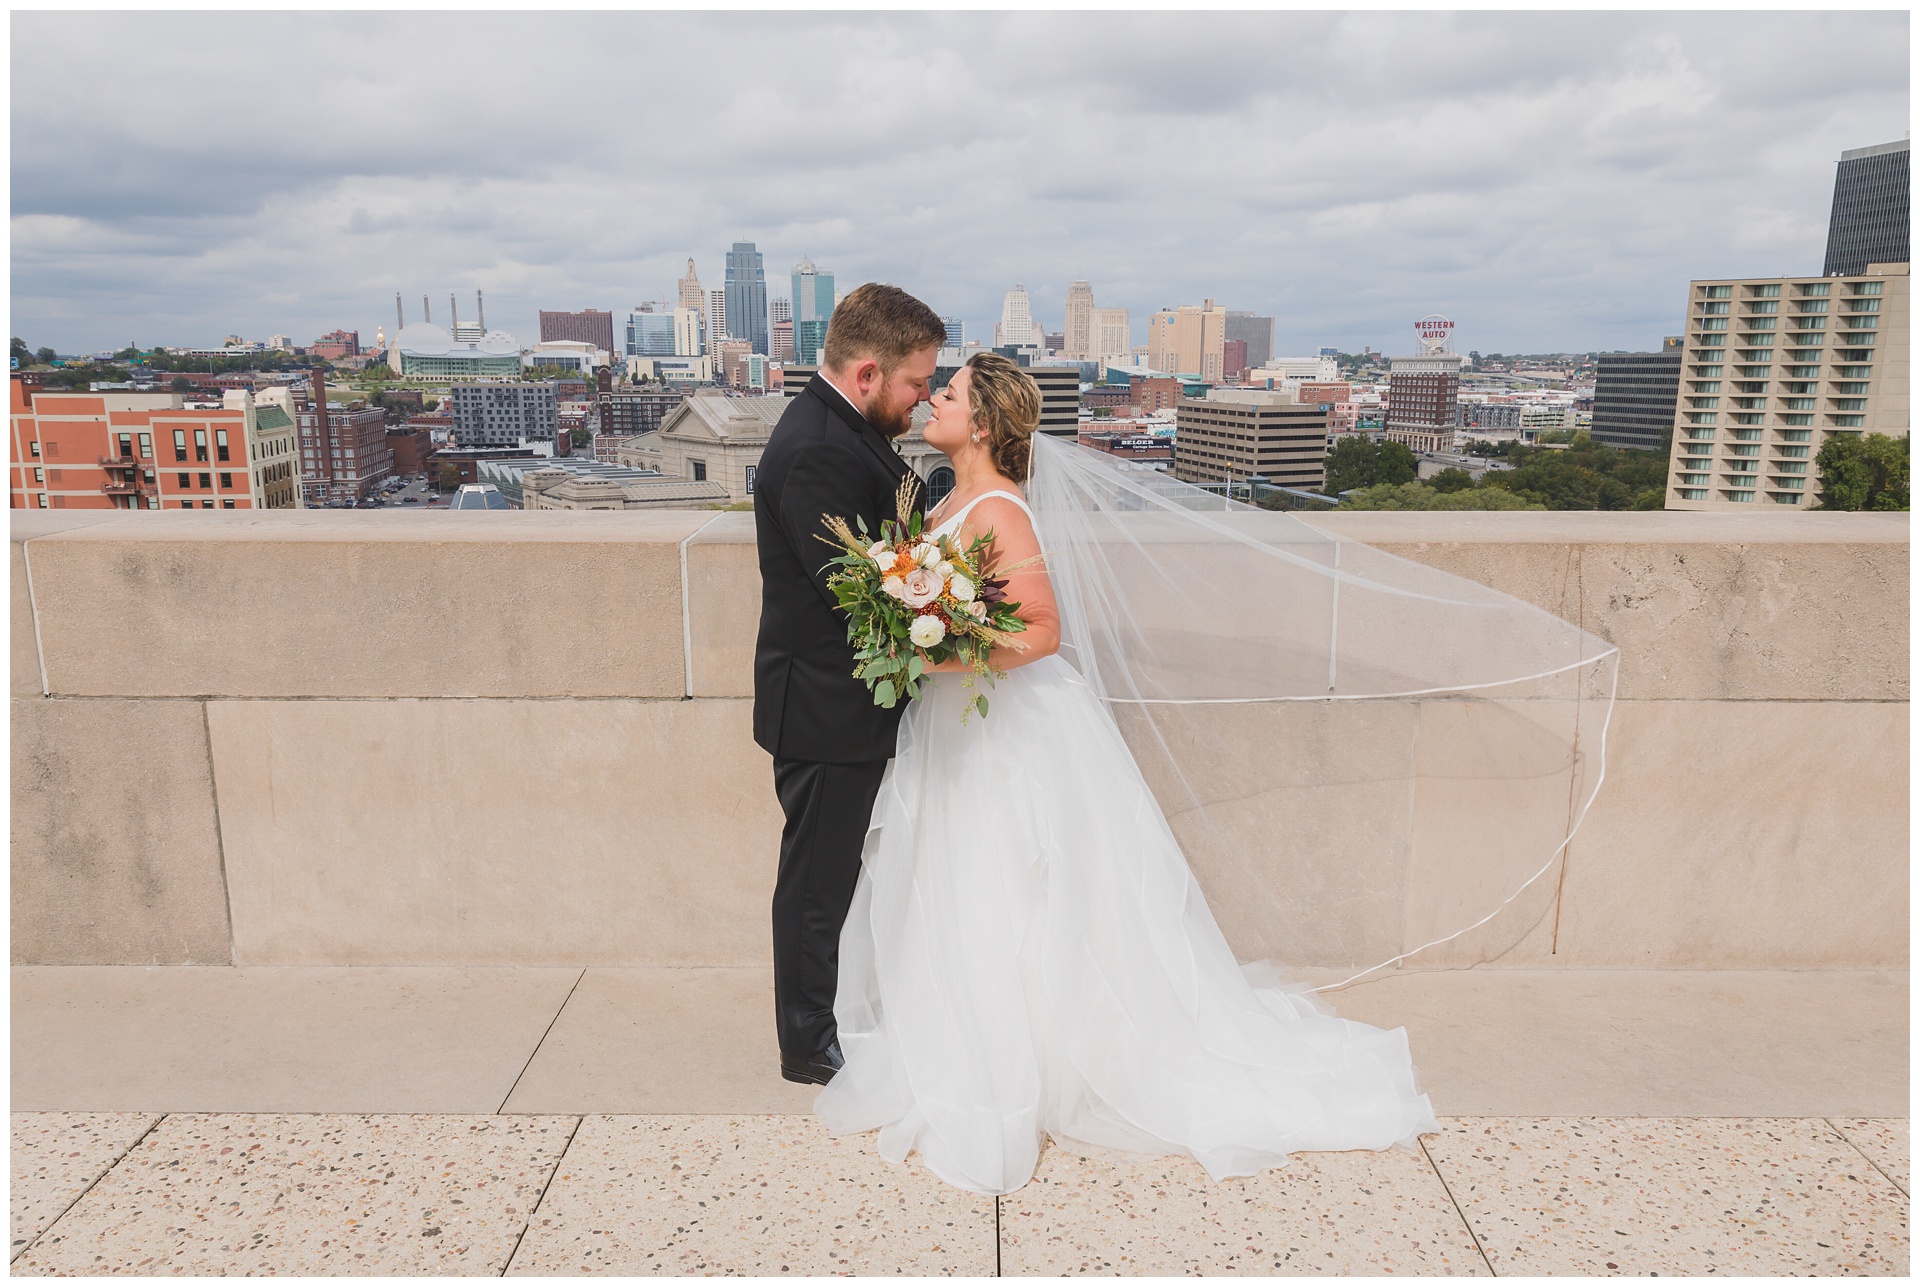 Wedding photography at Liberty Memorial by Kansas City wedding photographers Wisdom-Watson Weddings.